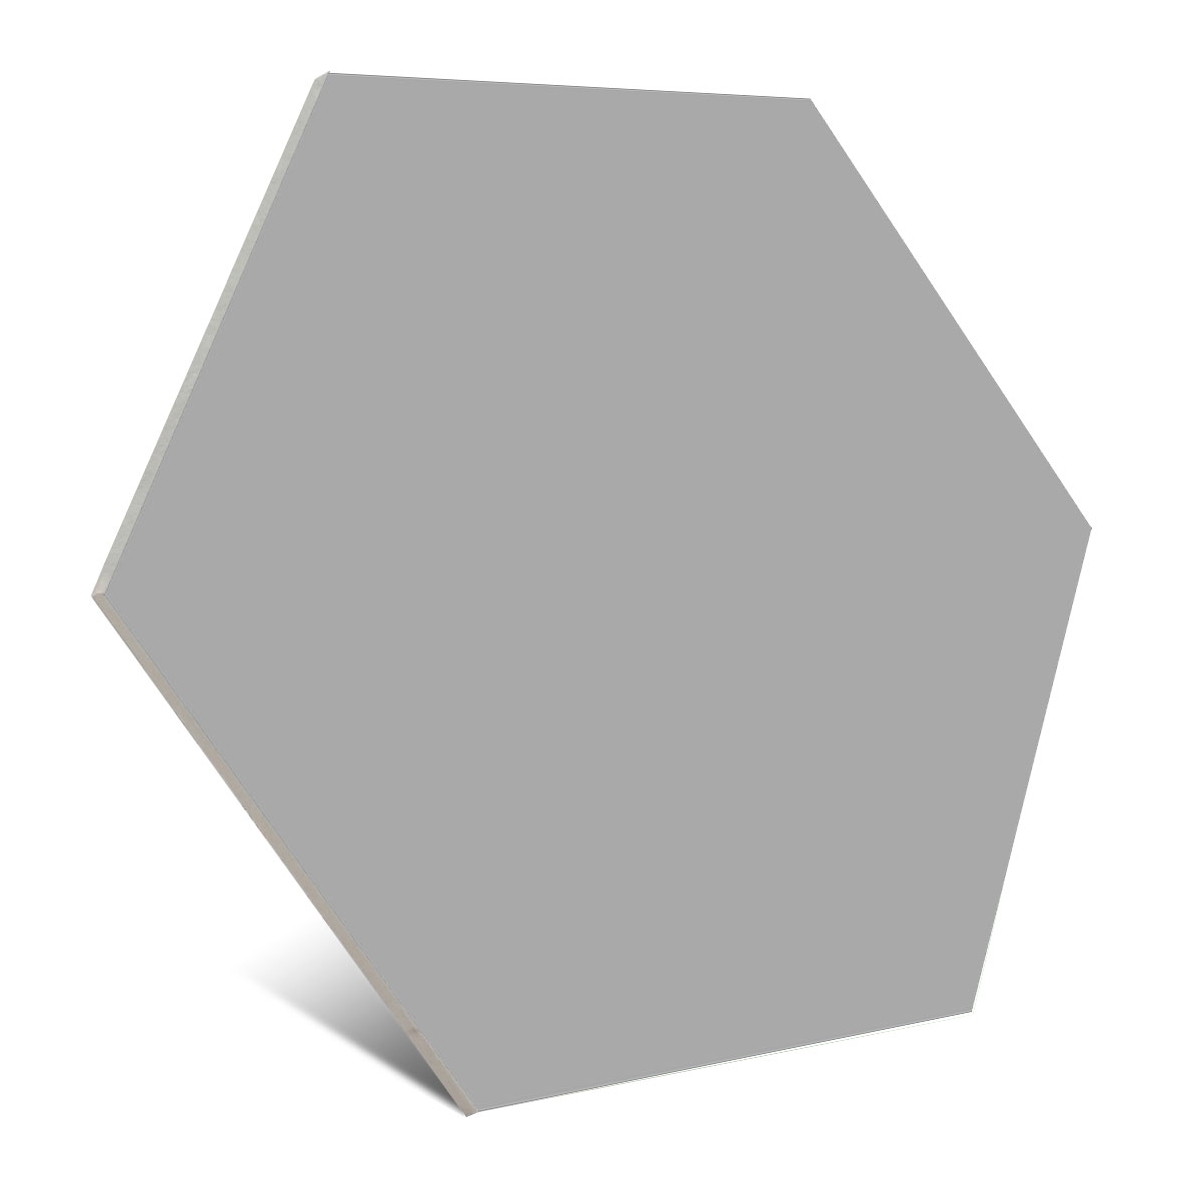 Hexa Element Acero 23x27 (caja 0.75 m2) diseño